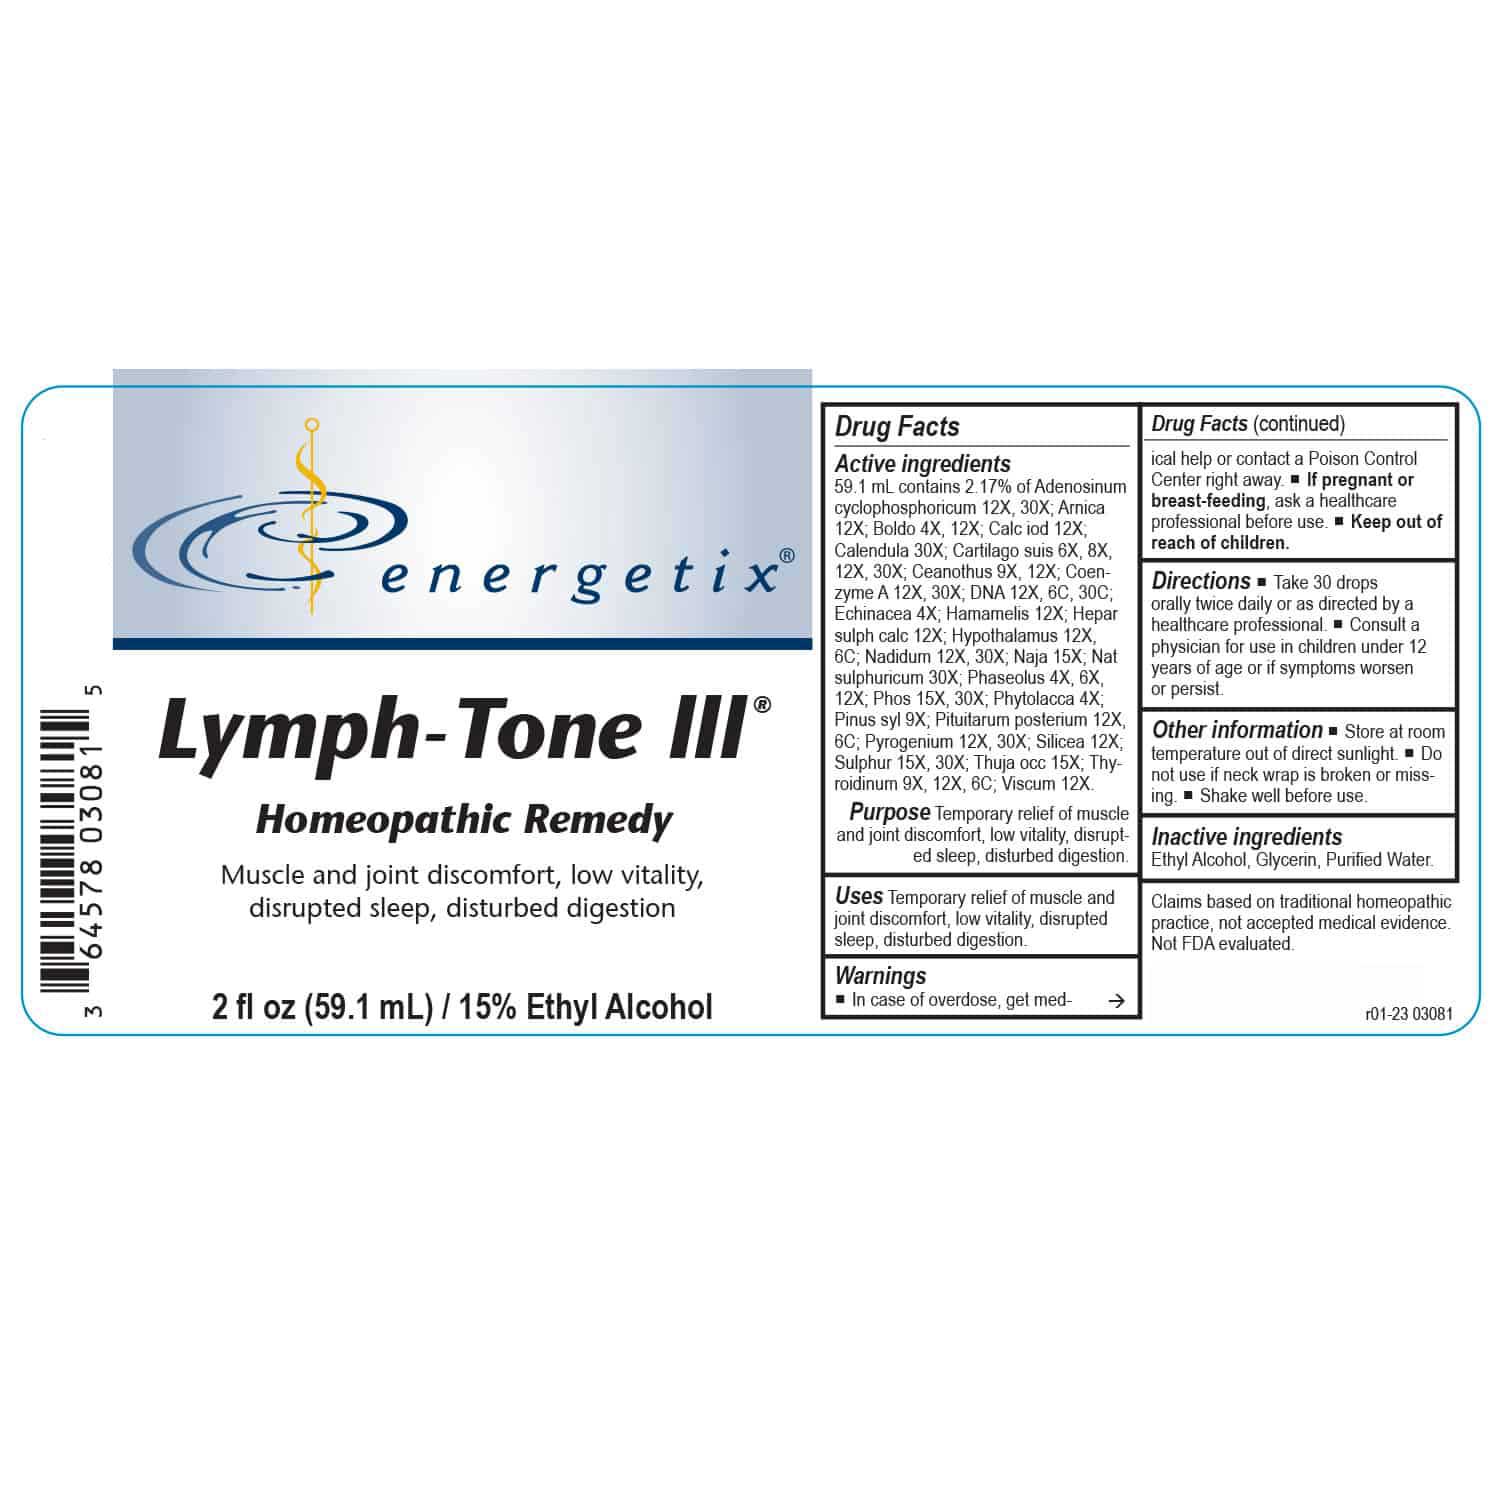 Energetix Lymph-Tone III Label